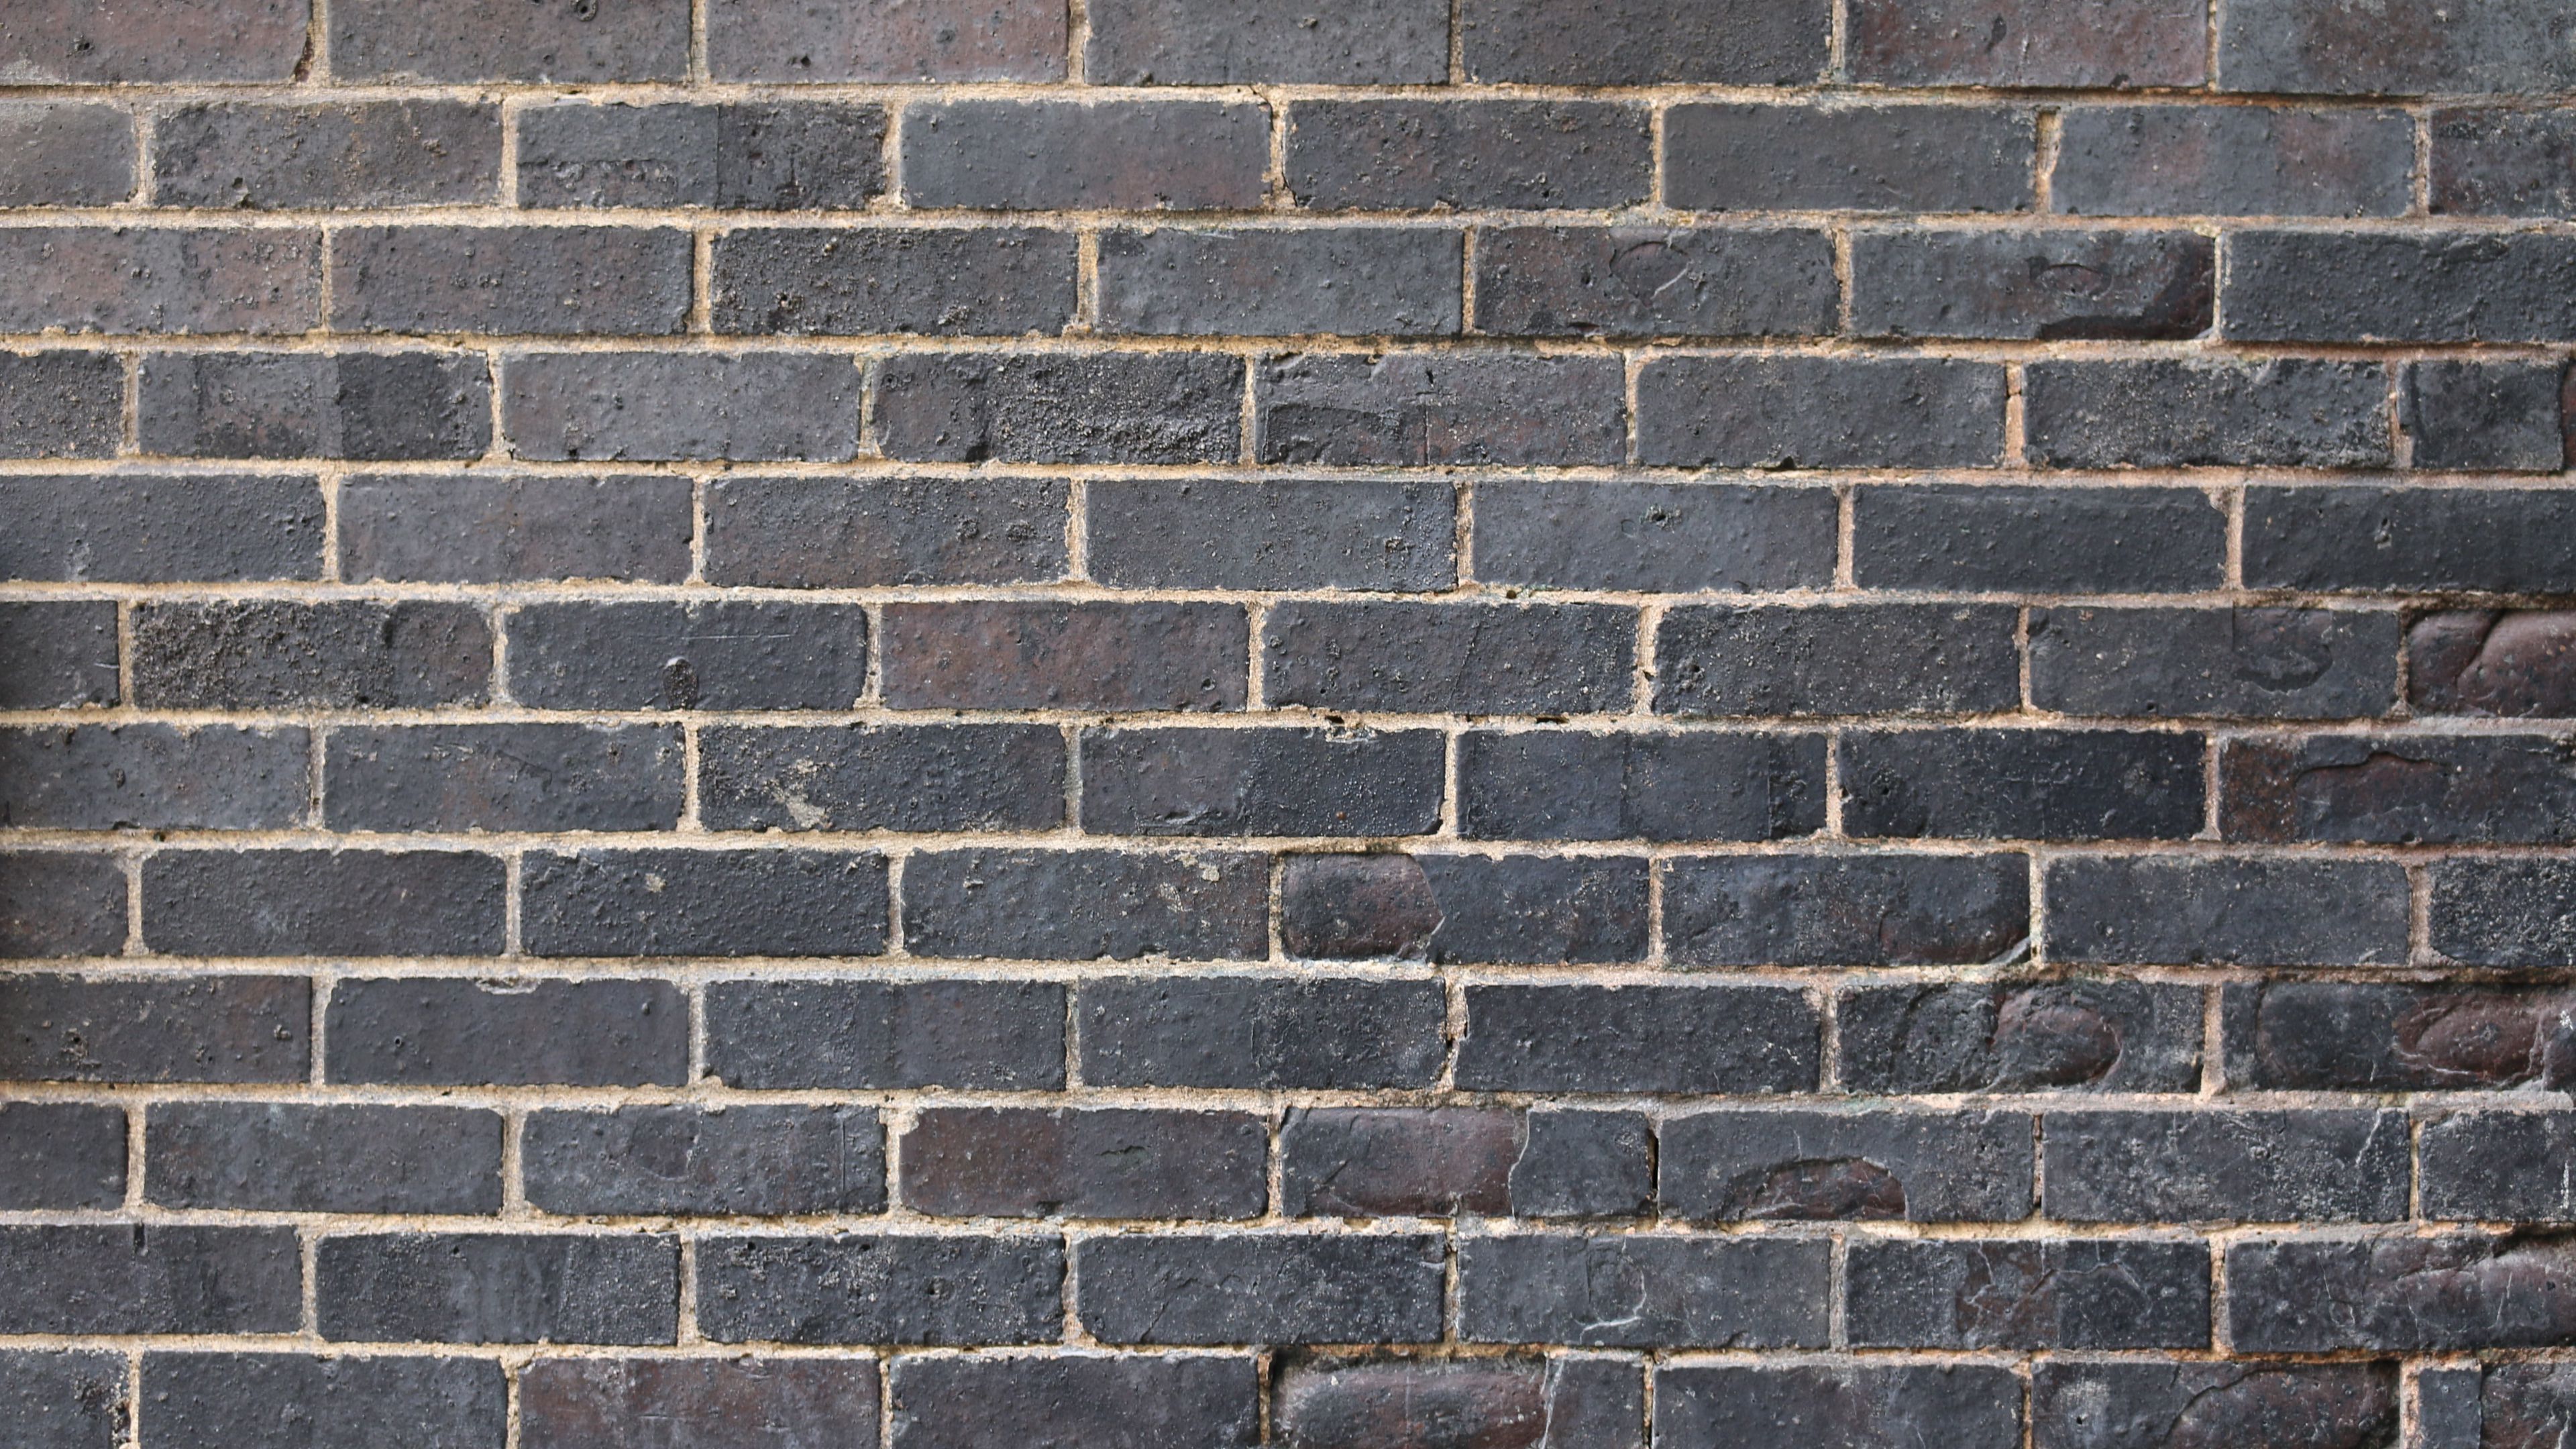 Top 999+ Brick Wallpaper Full HD, 4K✓Free to Use